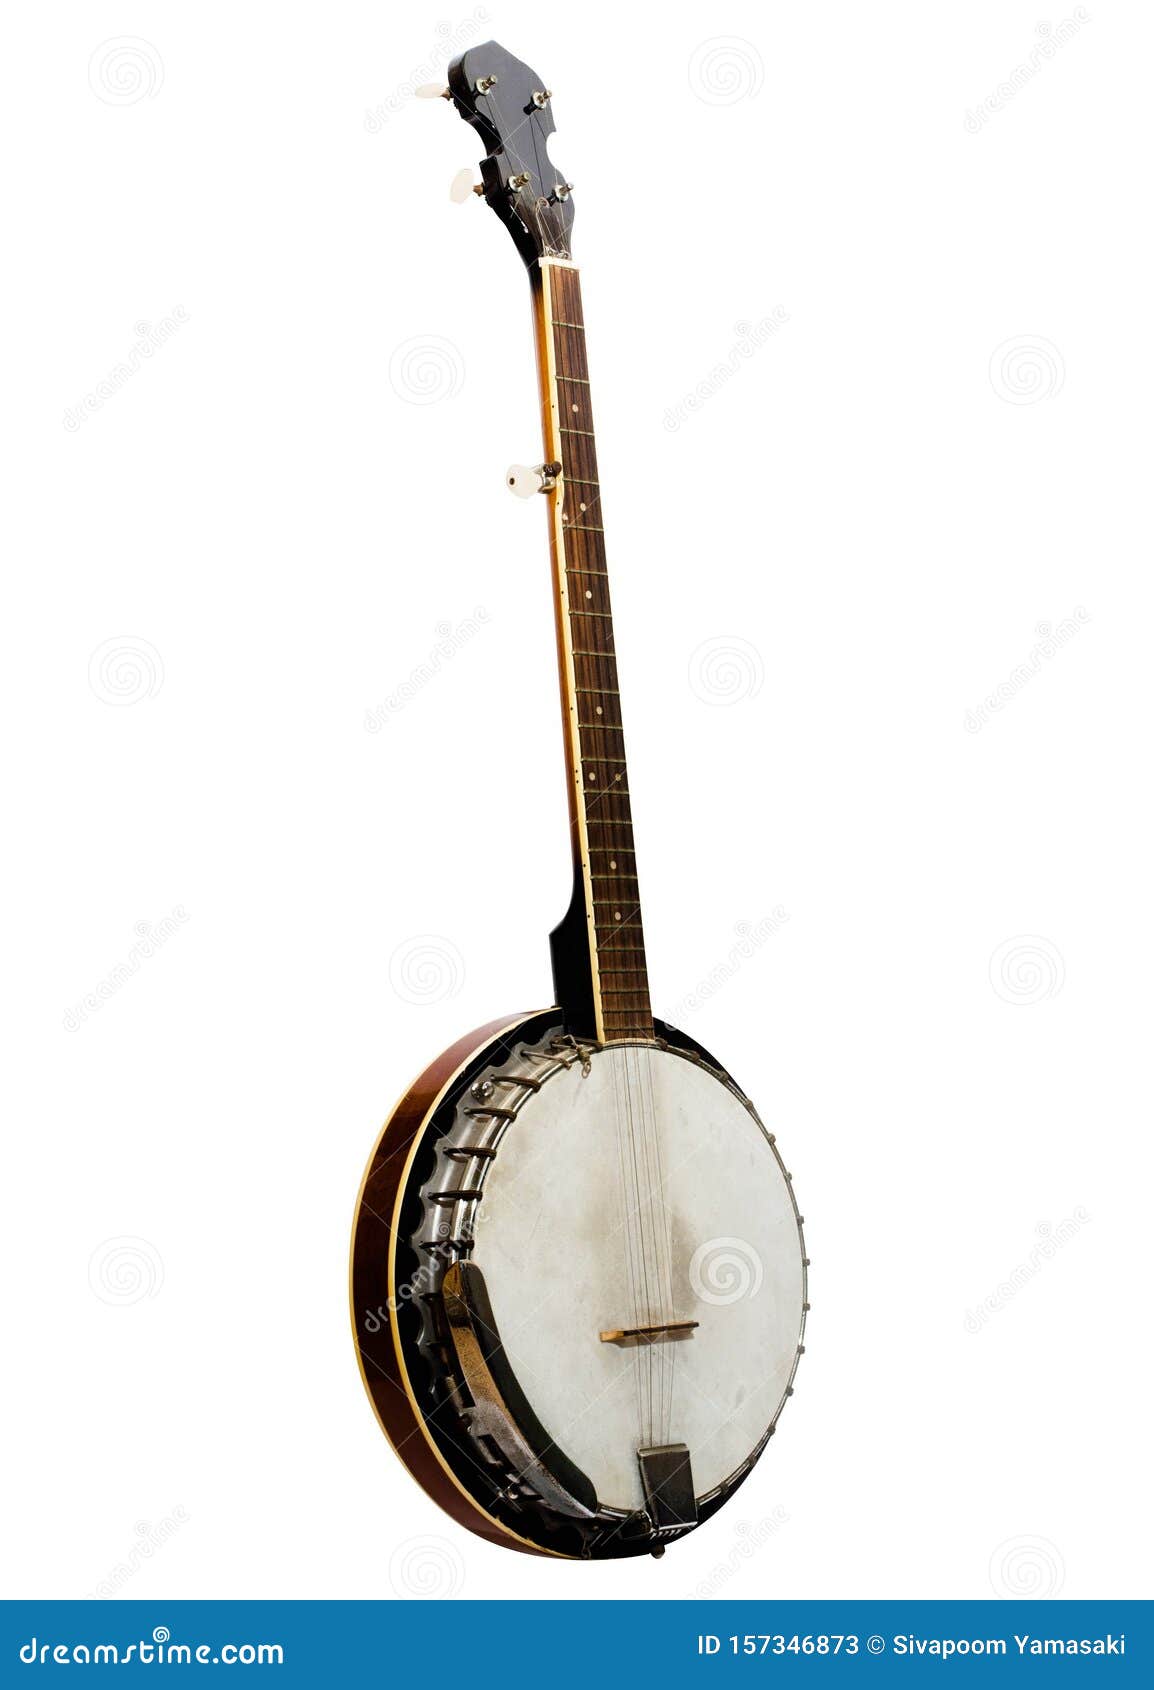 vintage bluegrass banjo  on white background